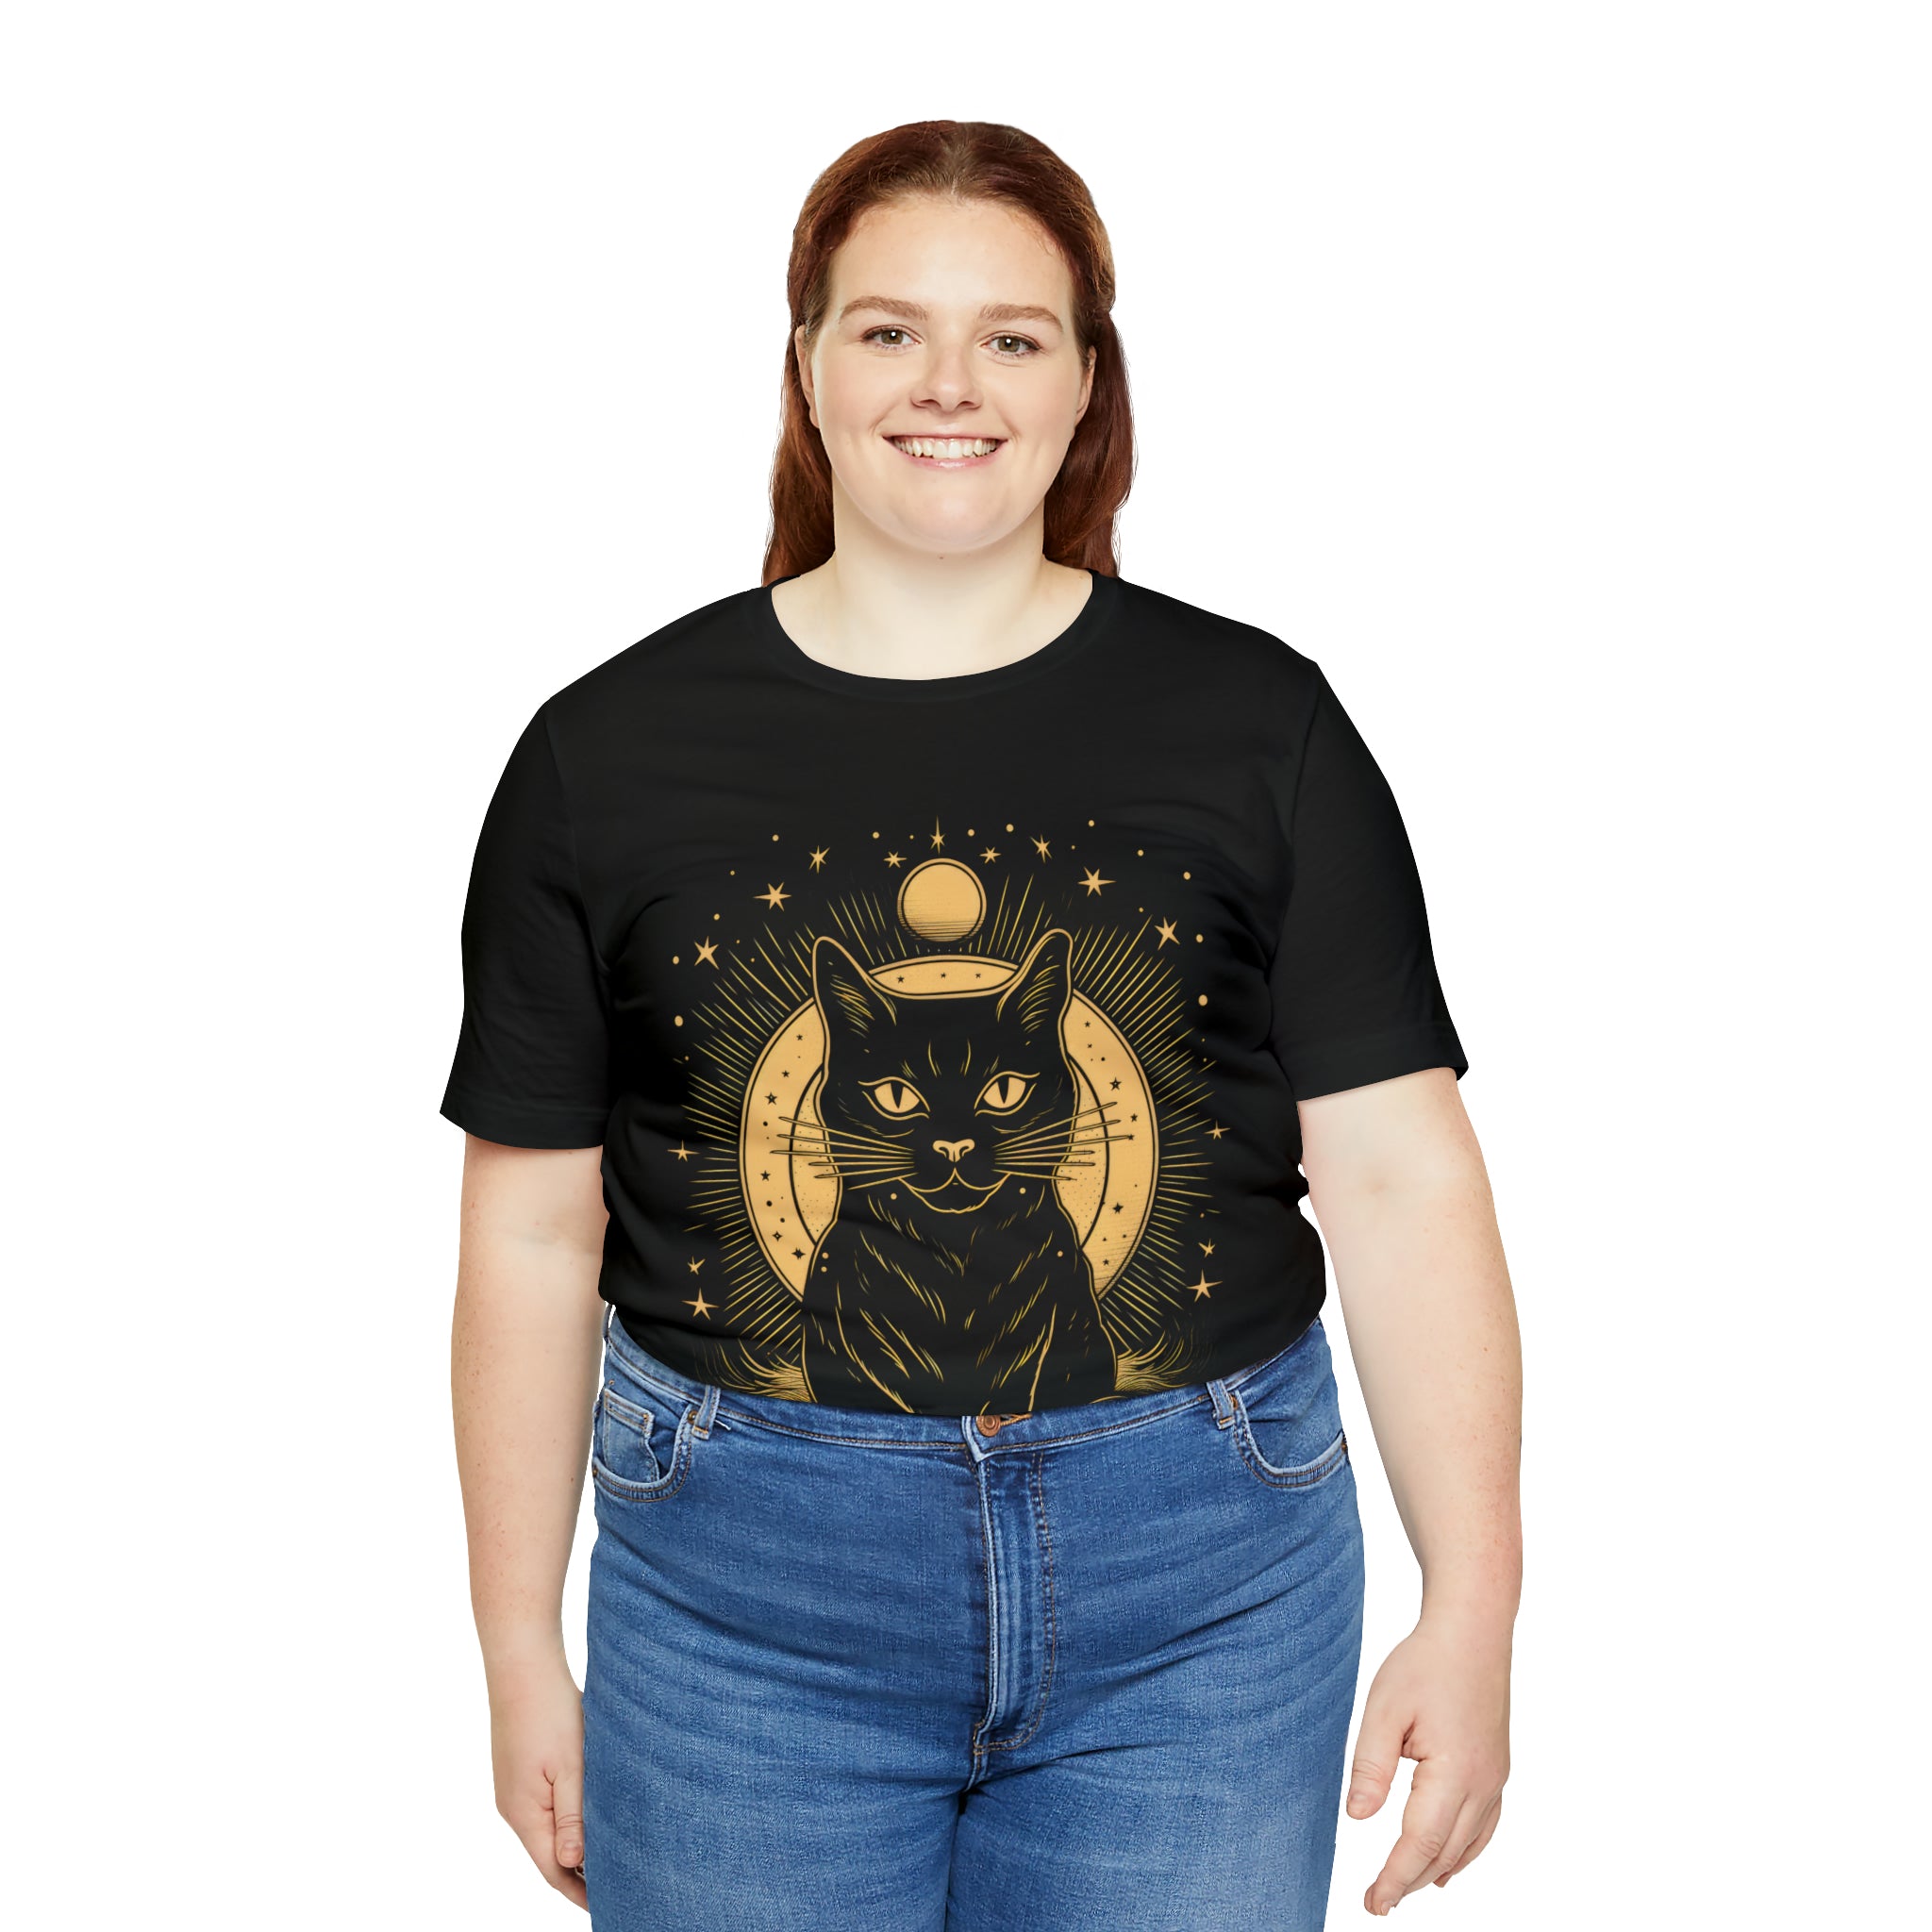 Cosmic kitty t-shirt plus